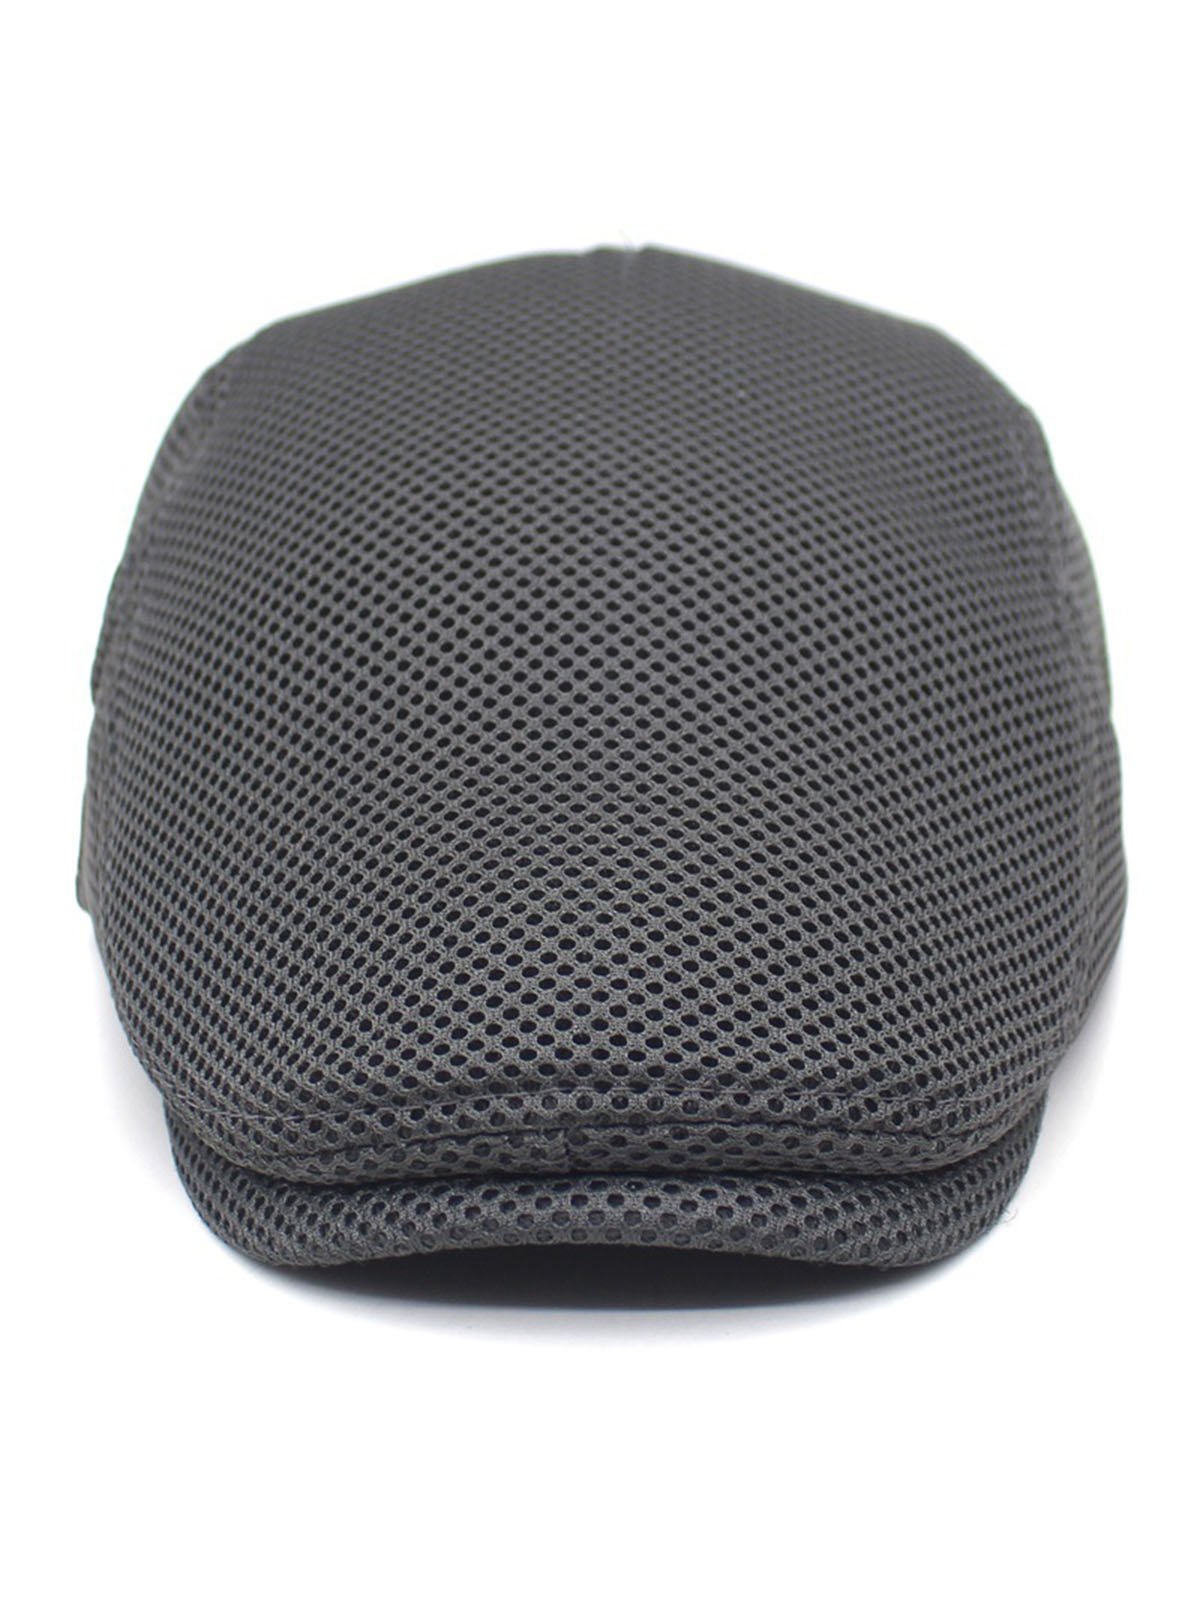 Hardaddy men's breathable cap